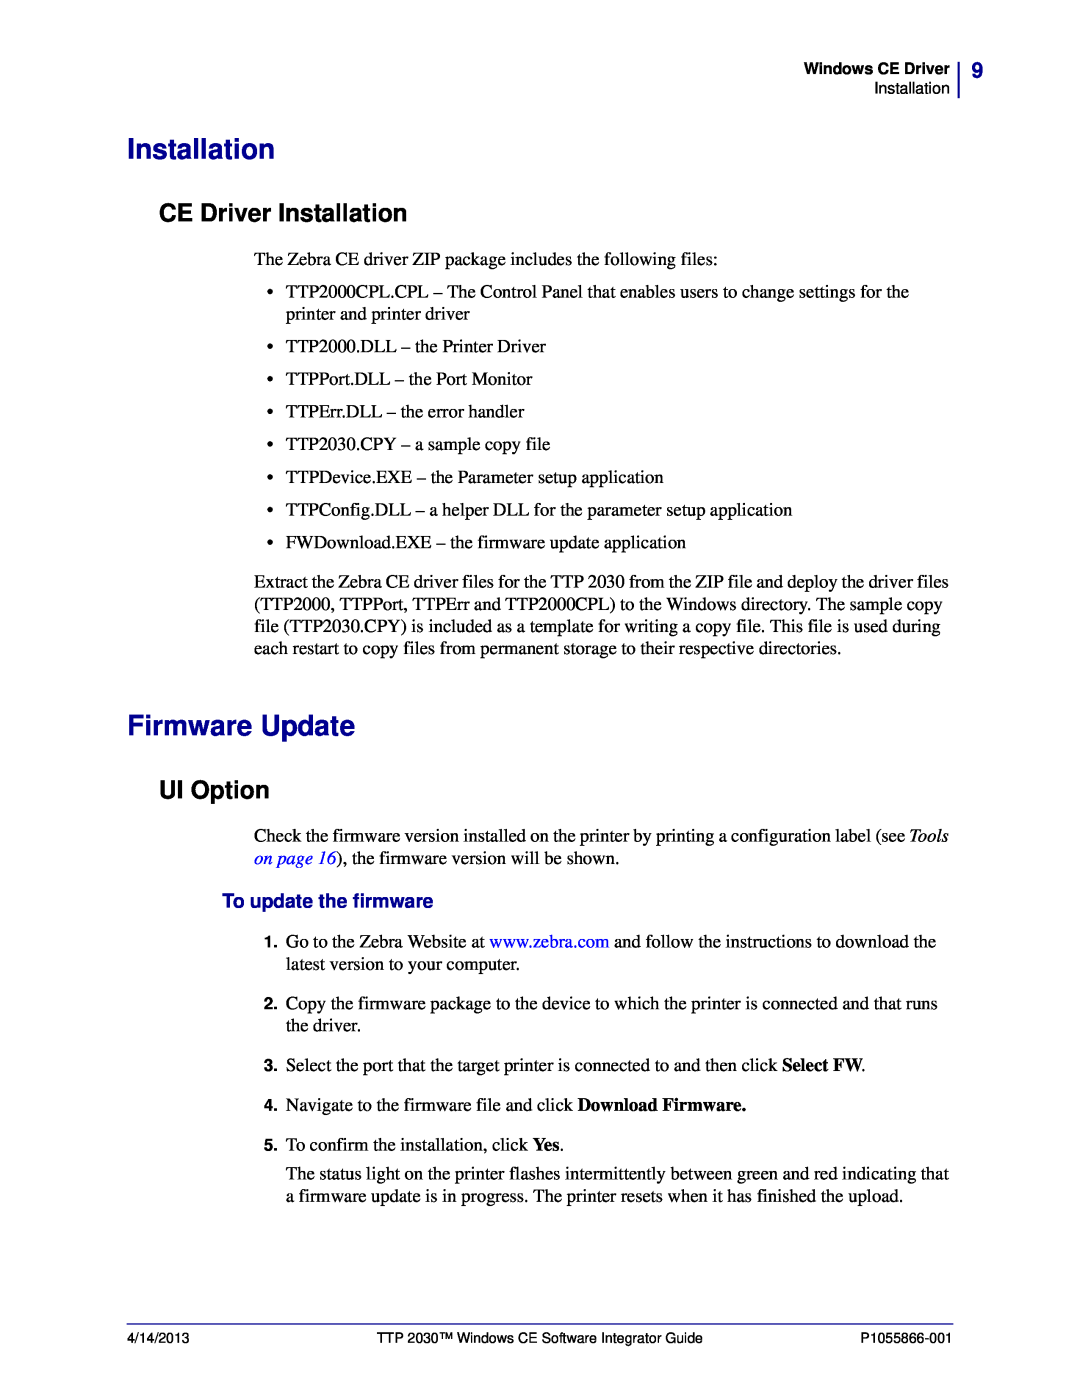 Zebra Technologies TTP 2030 manual Firmware Update, CE Driver Installation, UI Option, To update the firmware 